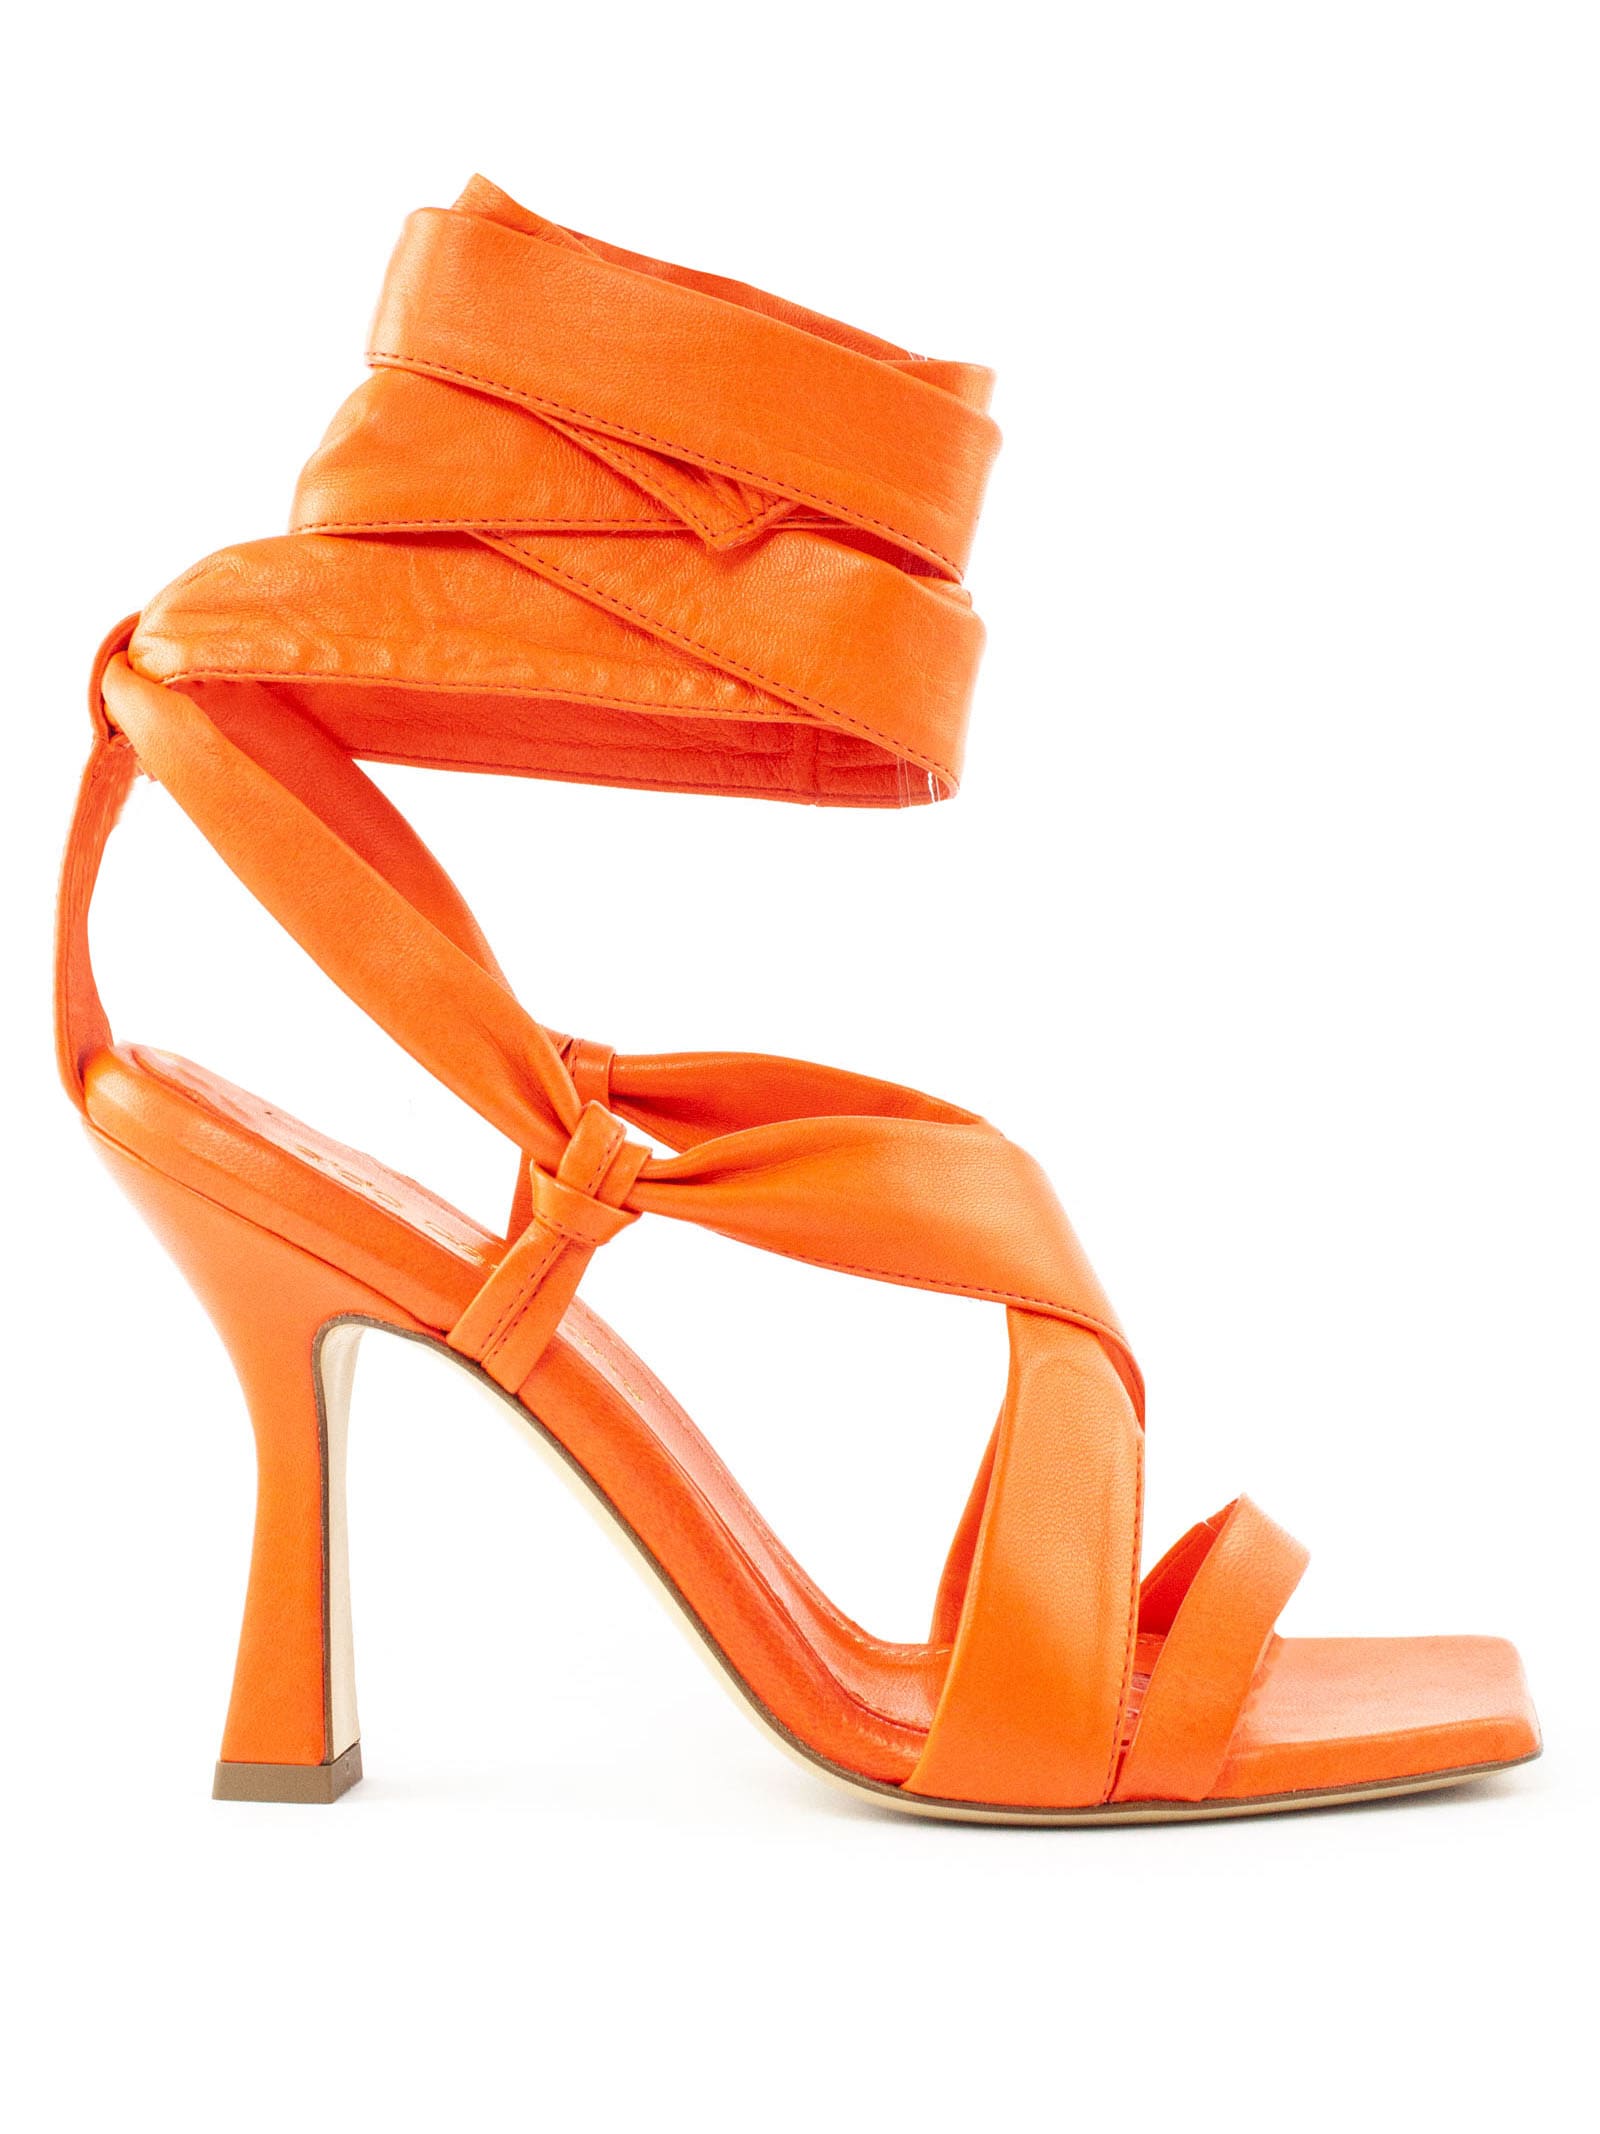 Aldo Castagna Giuliana Orange Leather Sandal